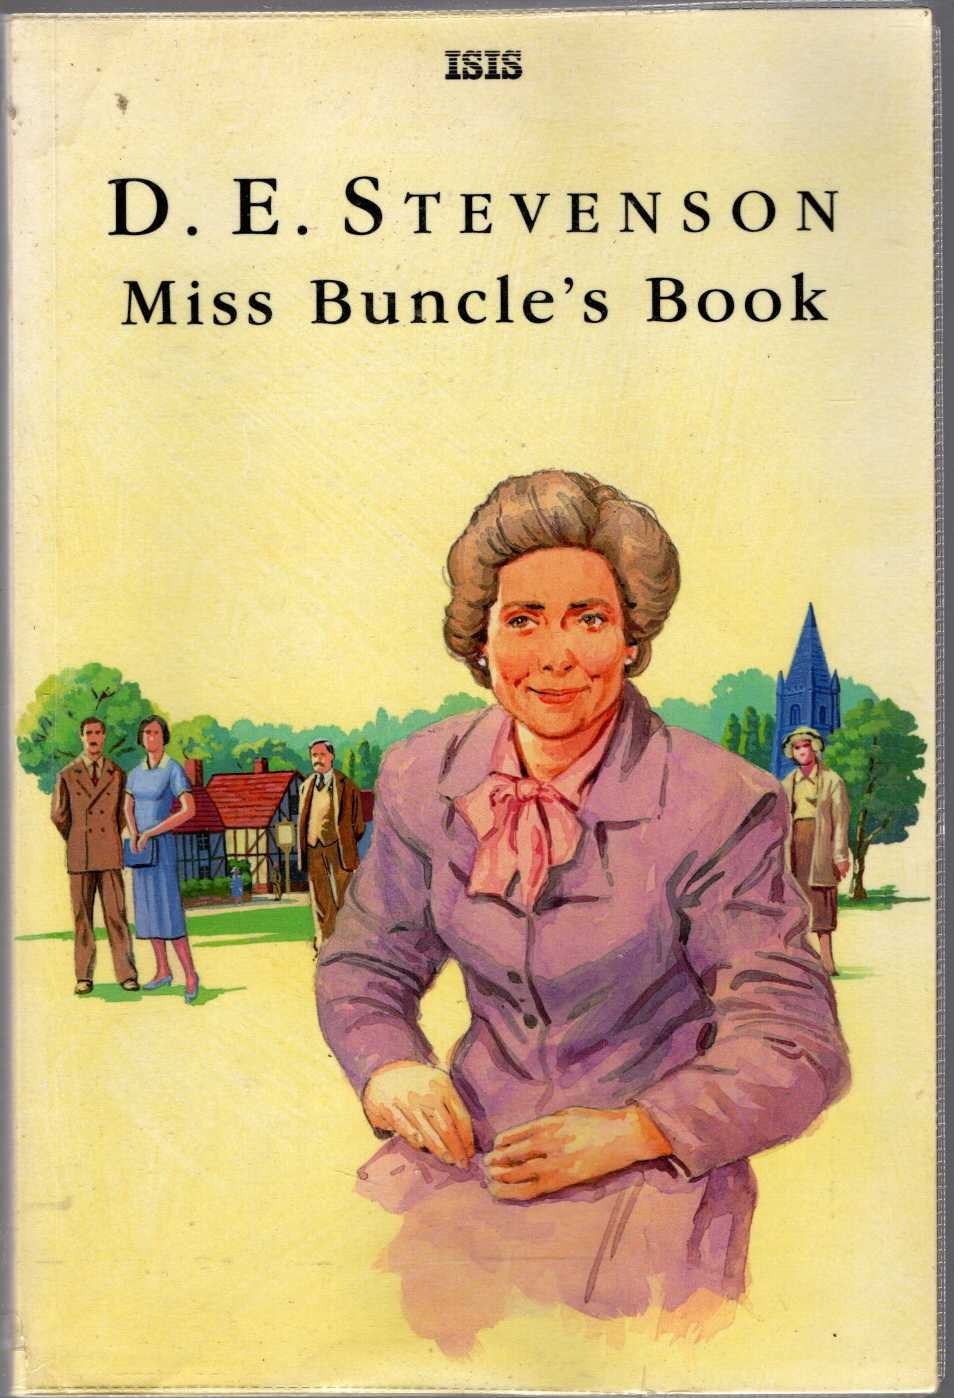 D.E. Stevenson  MISS BUNCLE'S BOOK front book cover image